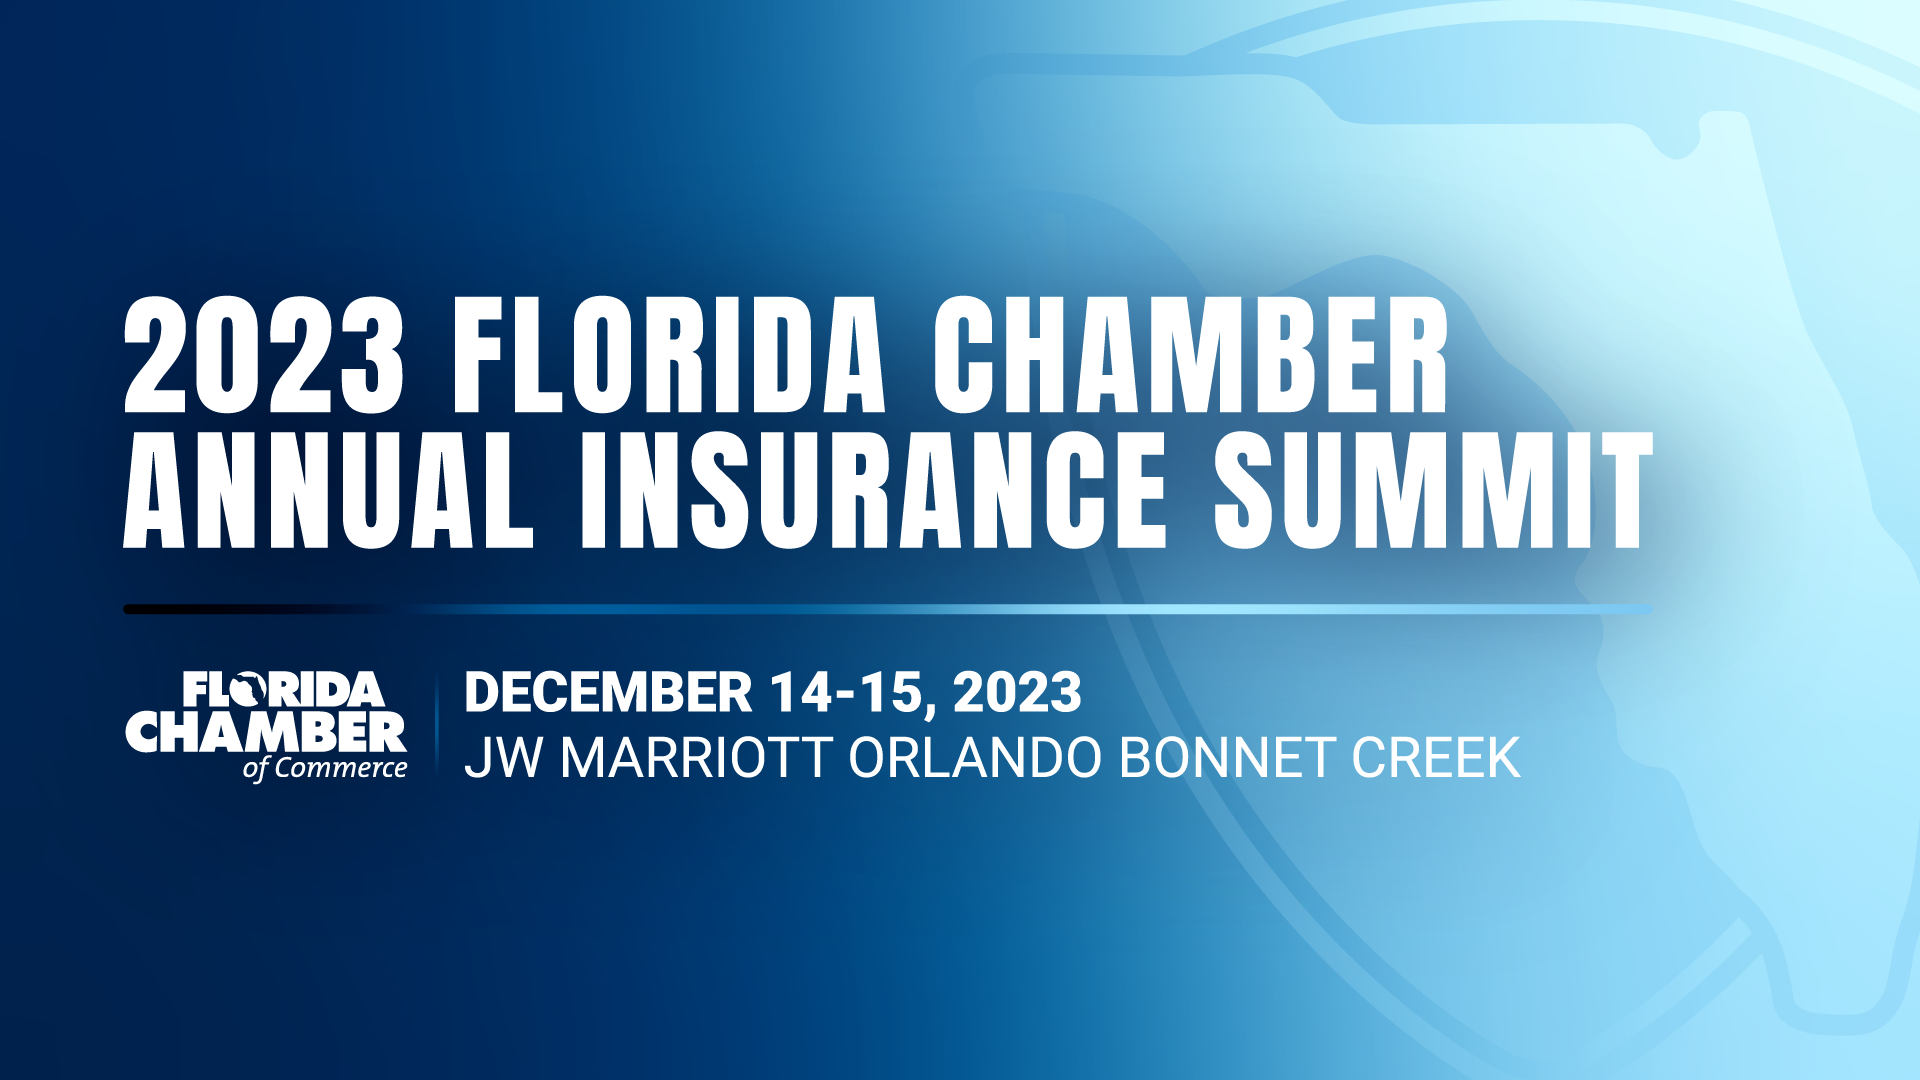 2023 Florida Chamber Annual Insurance Summit, December 14-15, 2023, at JW Marriott Orlando Bonnet Creek